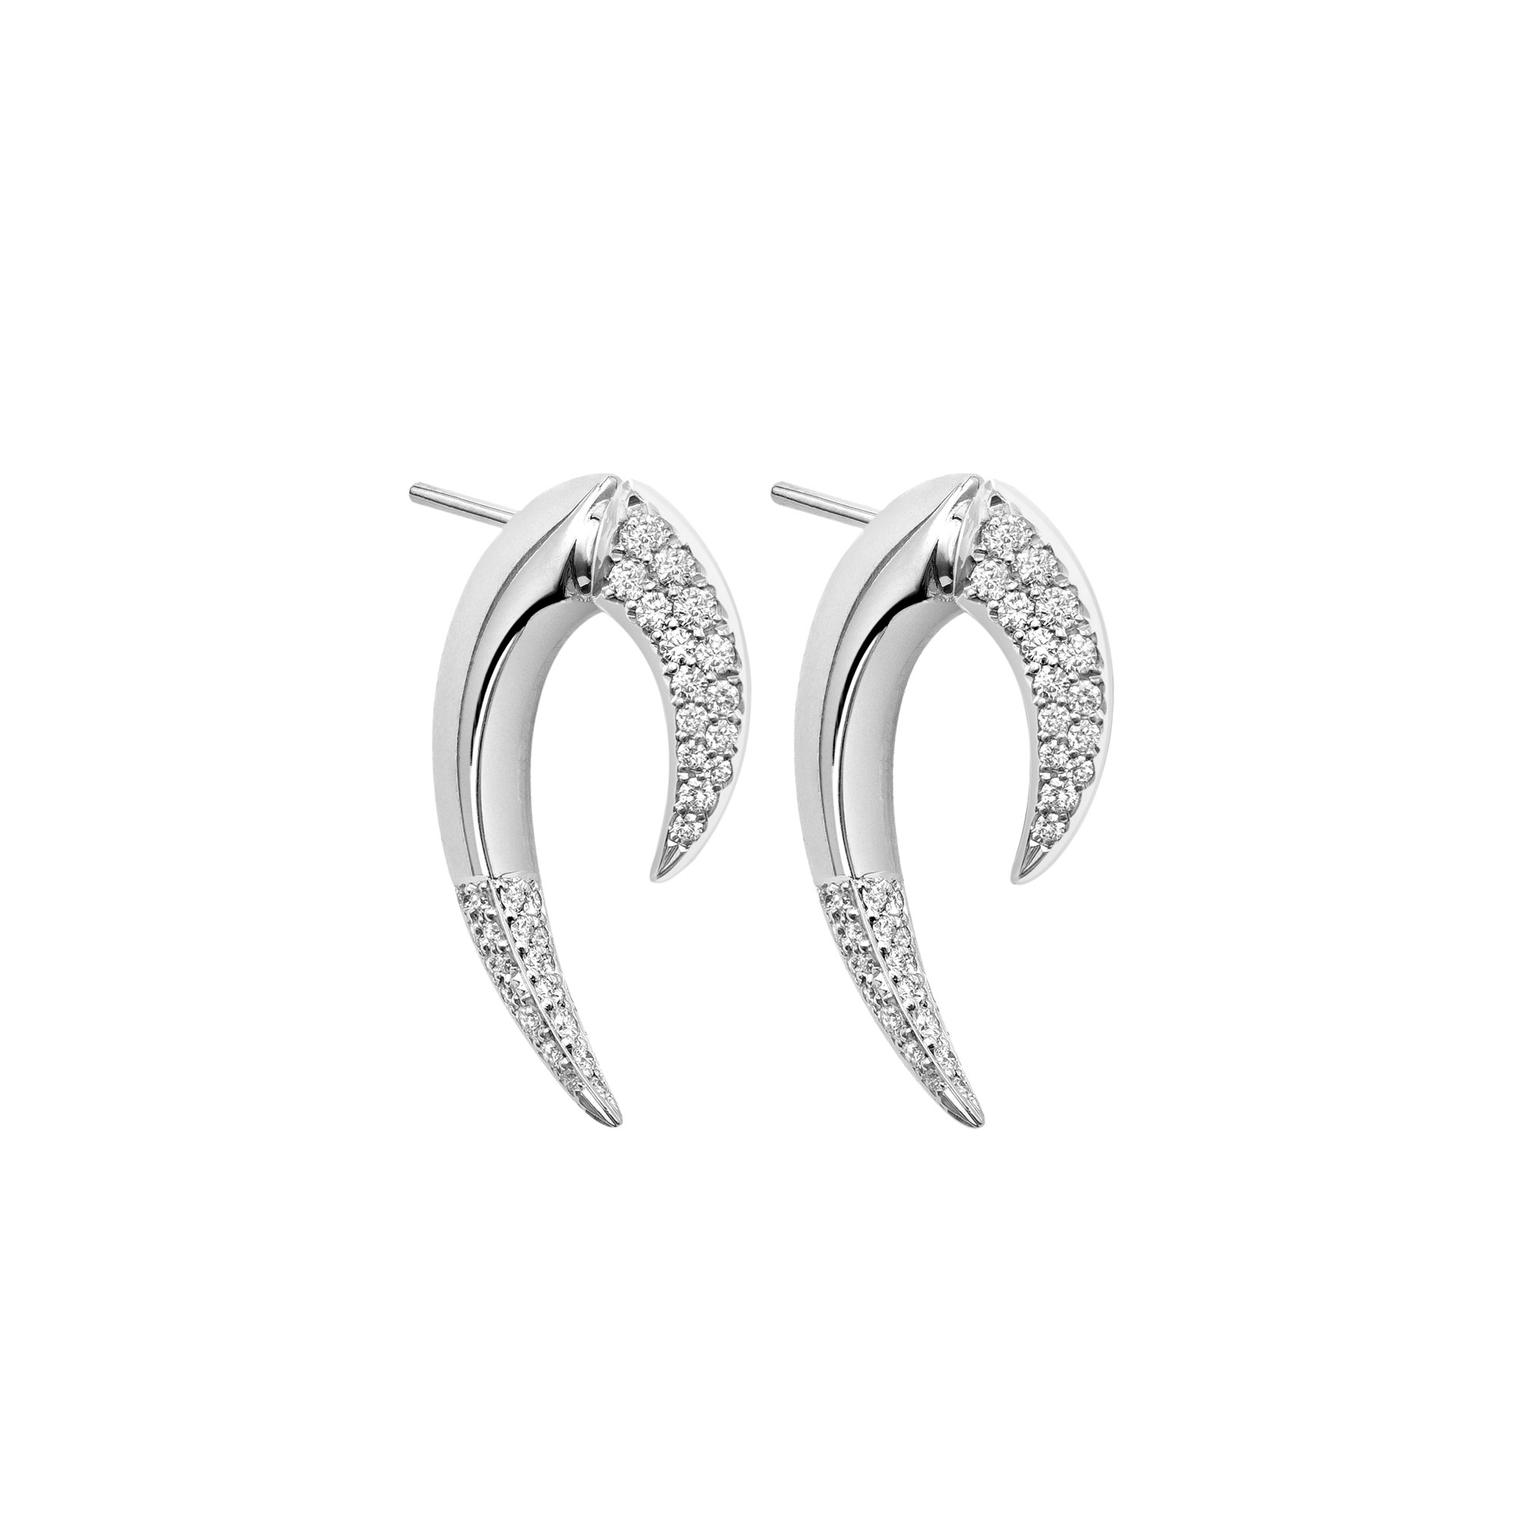 Shaun Leane Talon diamond earrings